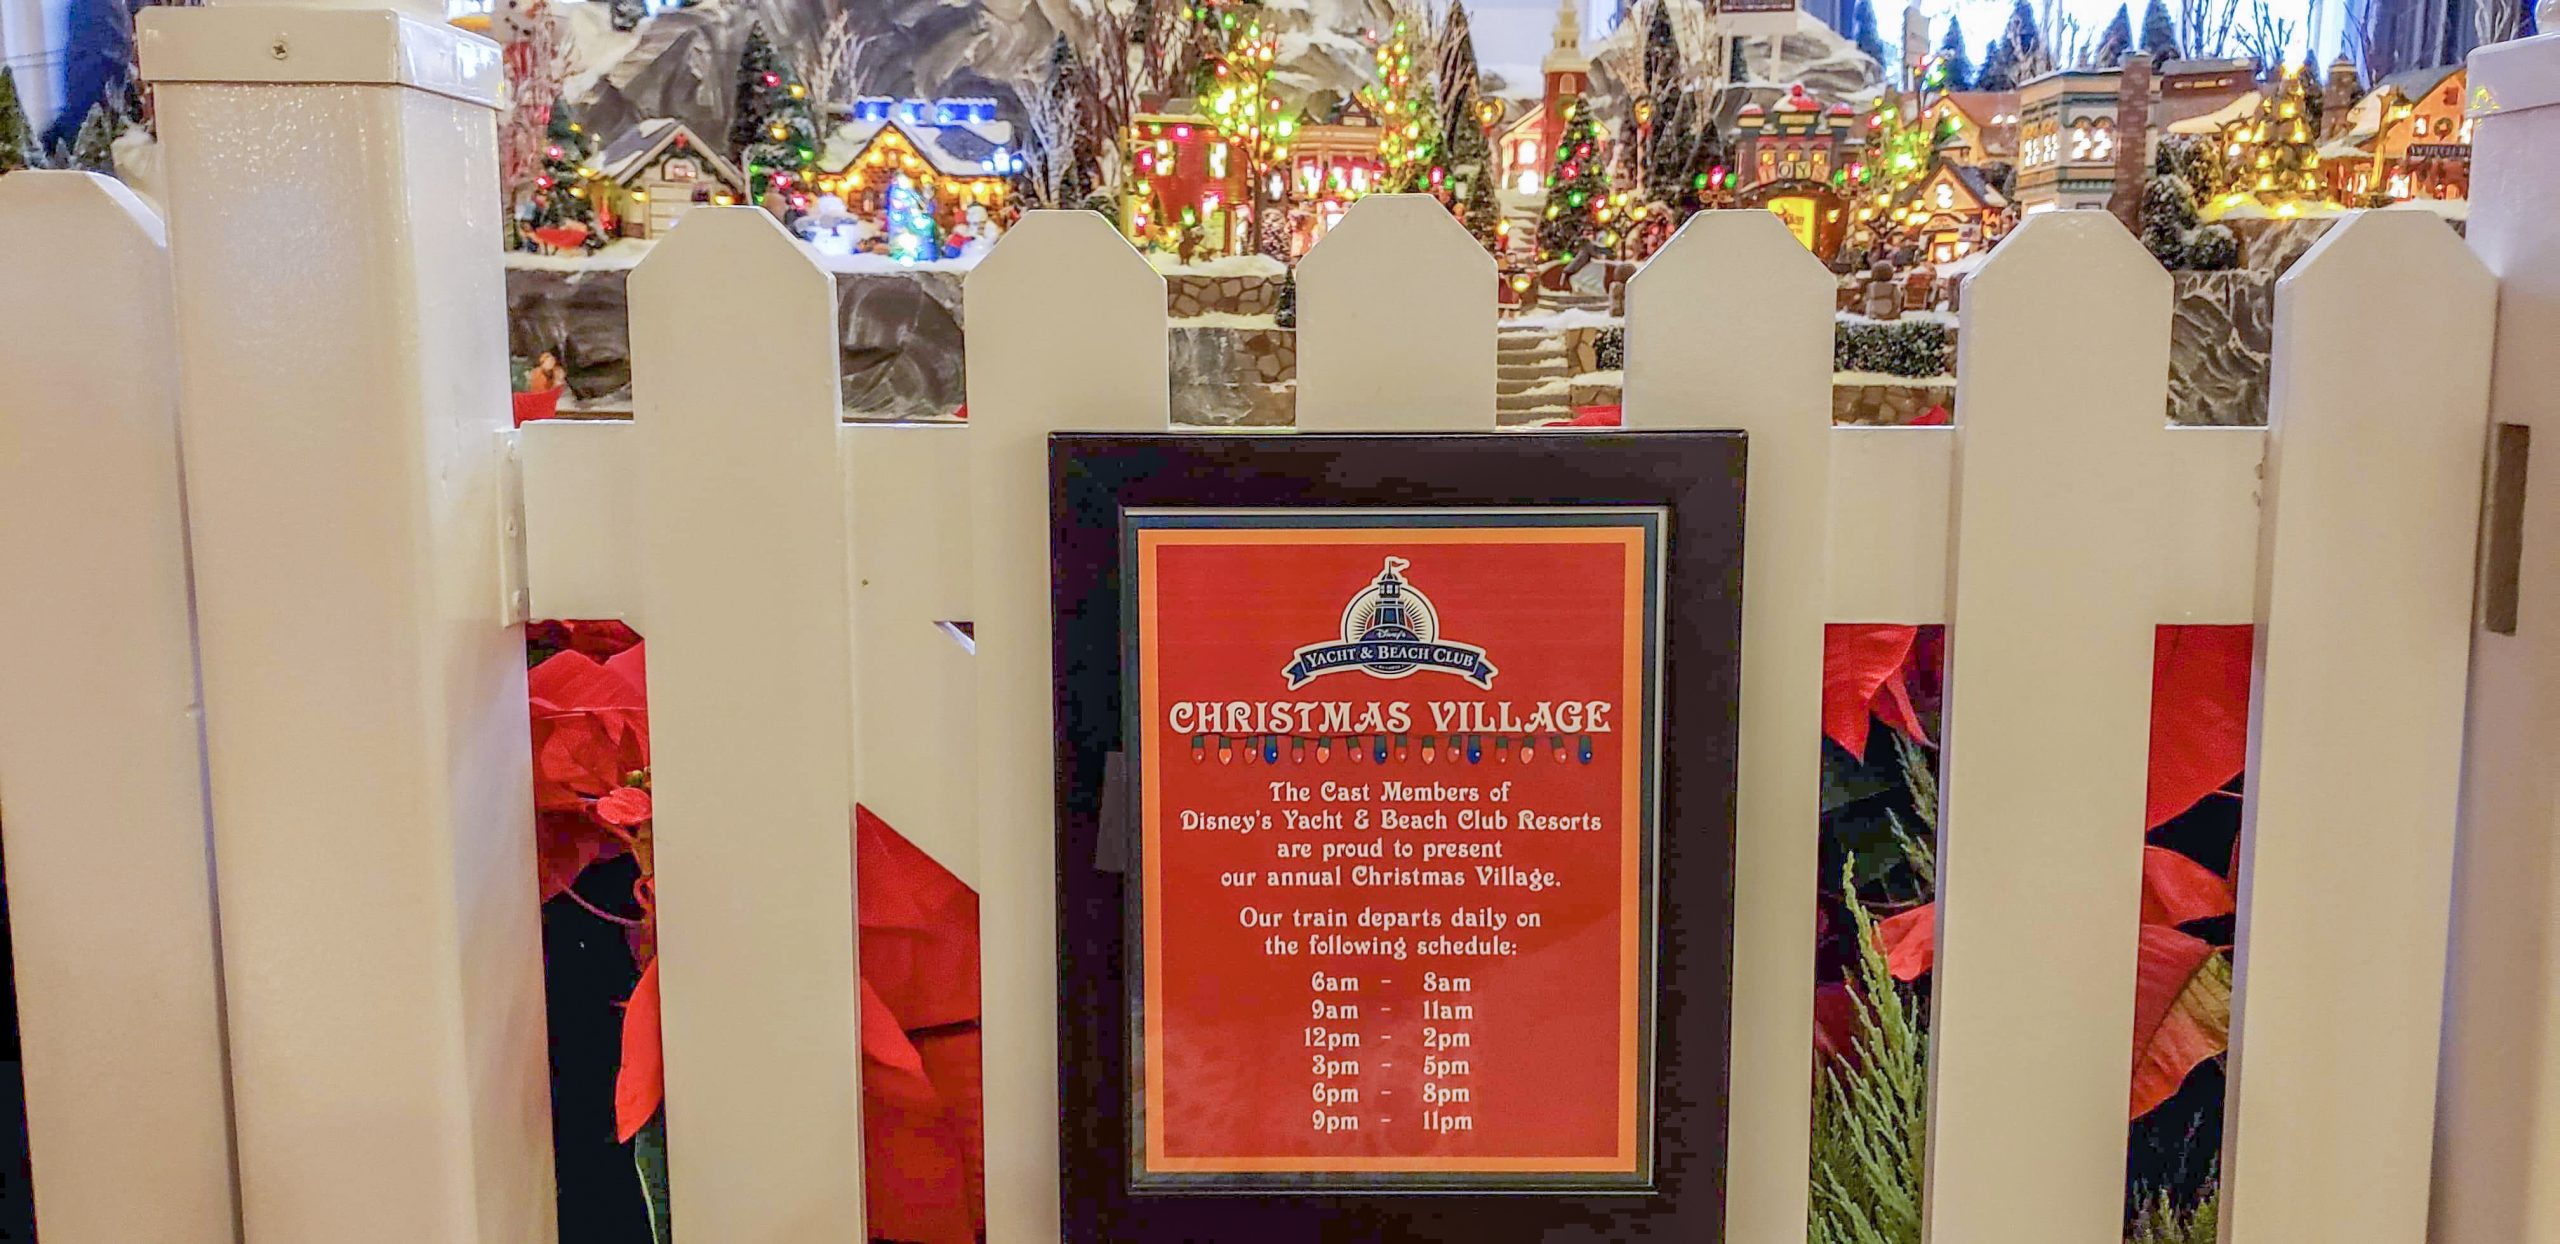 The Christmas Village Sails Back to Disney’s Yacht Club Resort